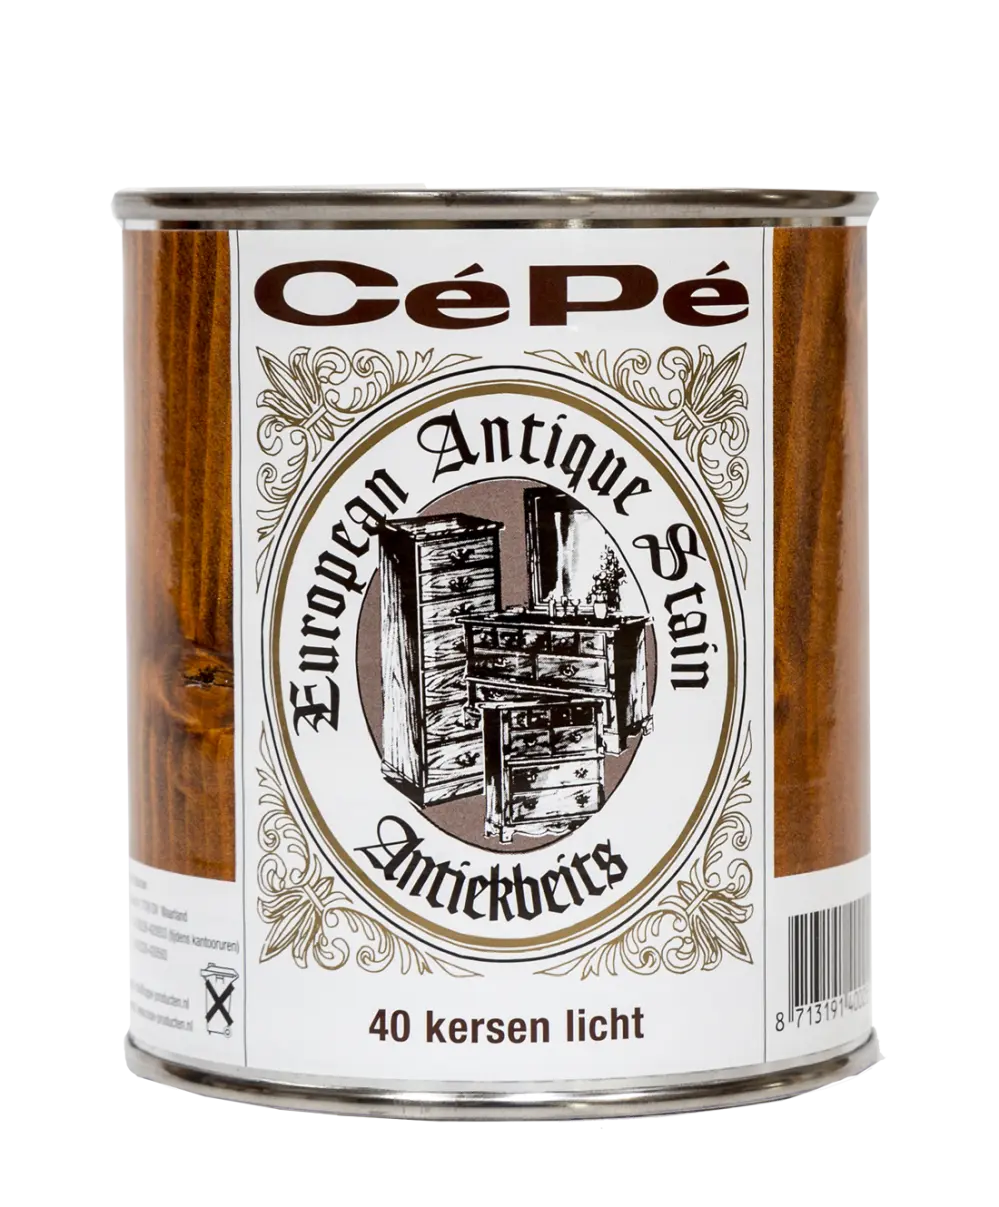 Cepe - antiekbeits-40-kersen-licht-verfcompleet.nl